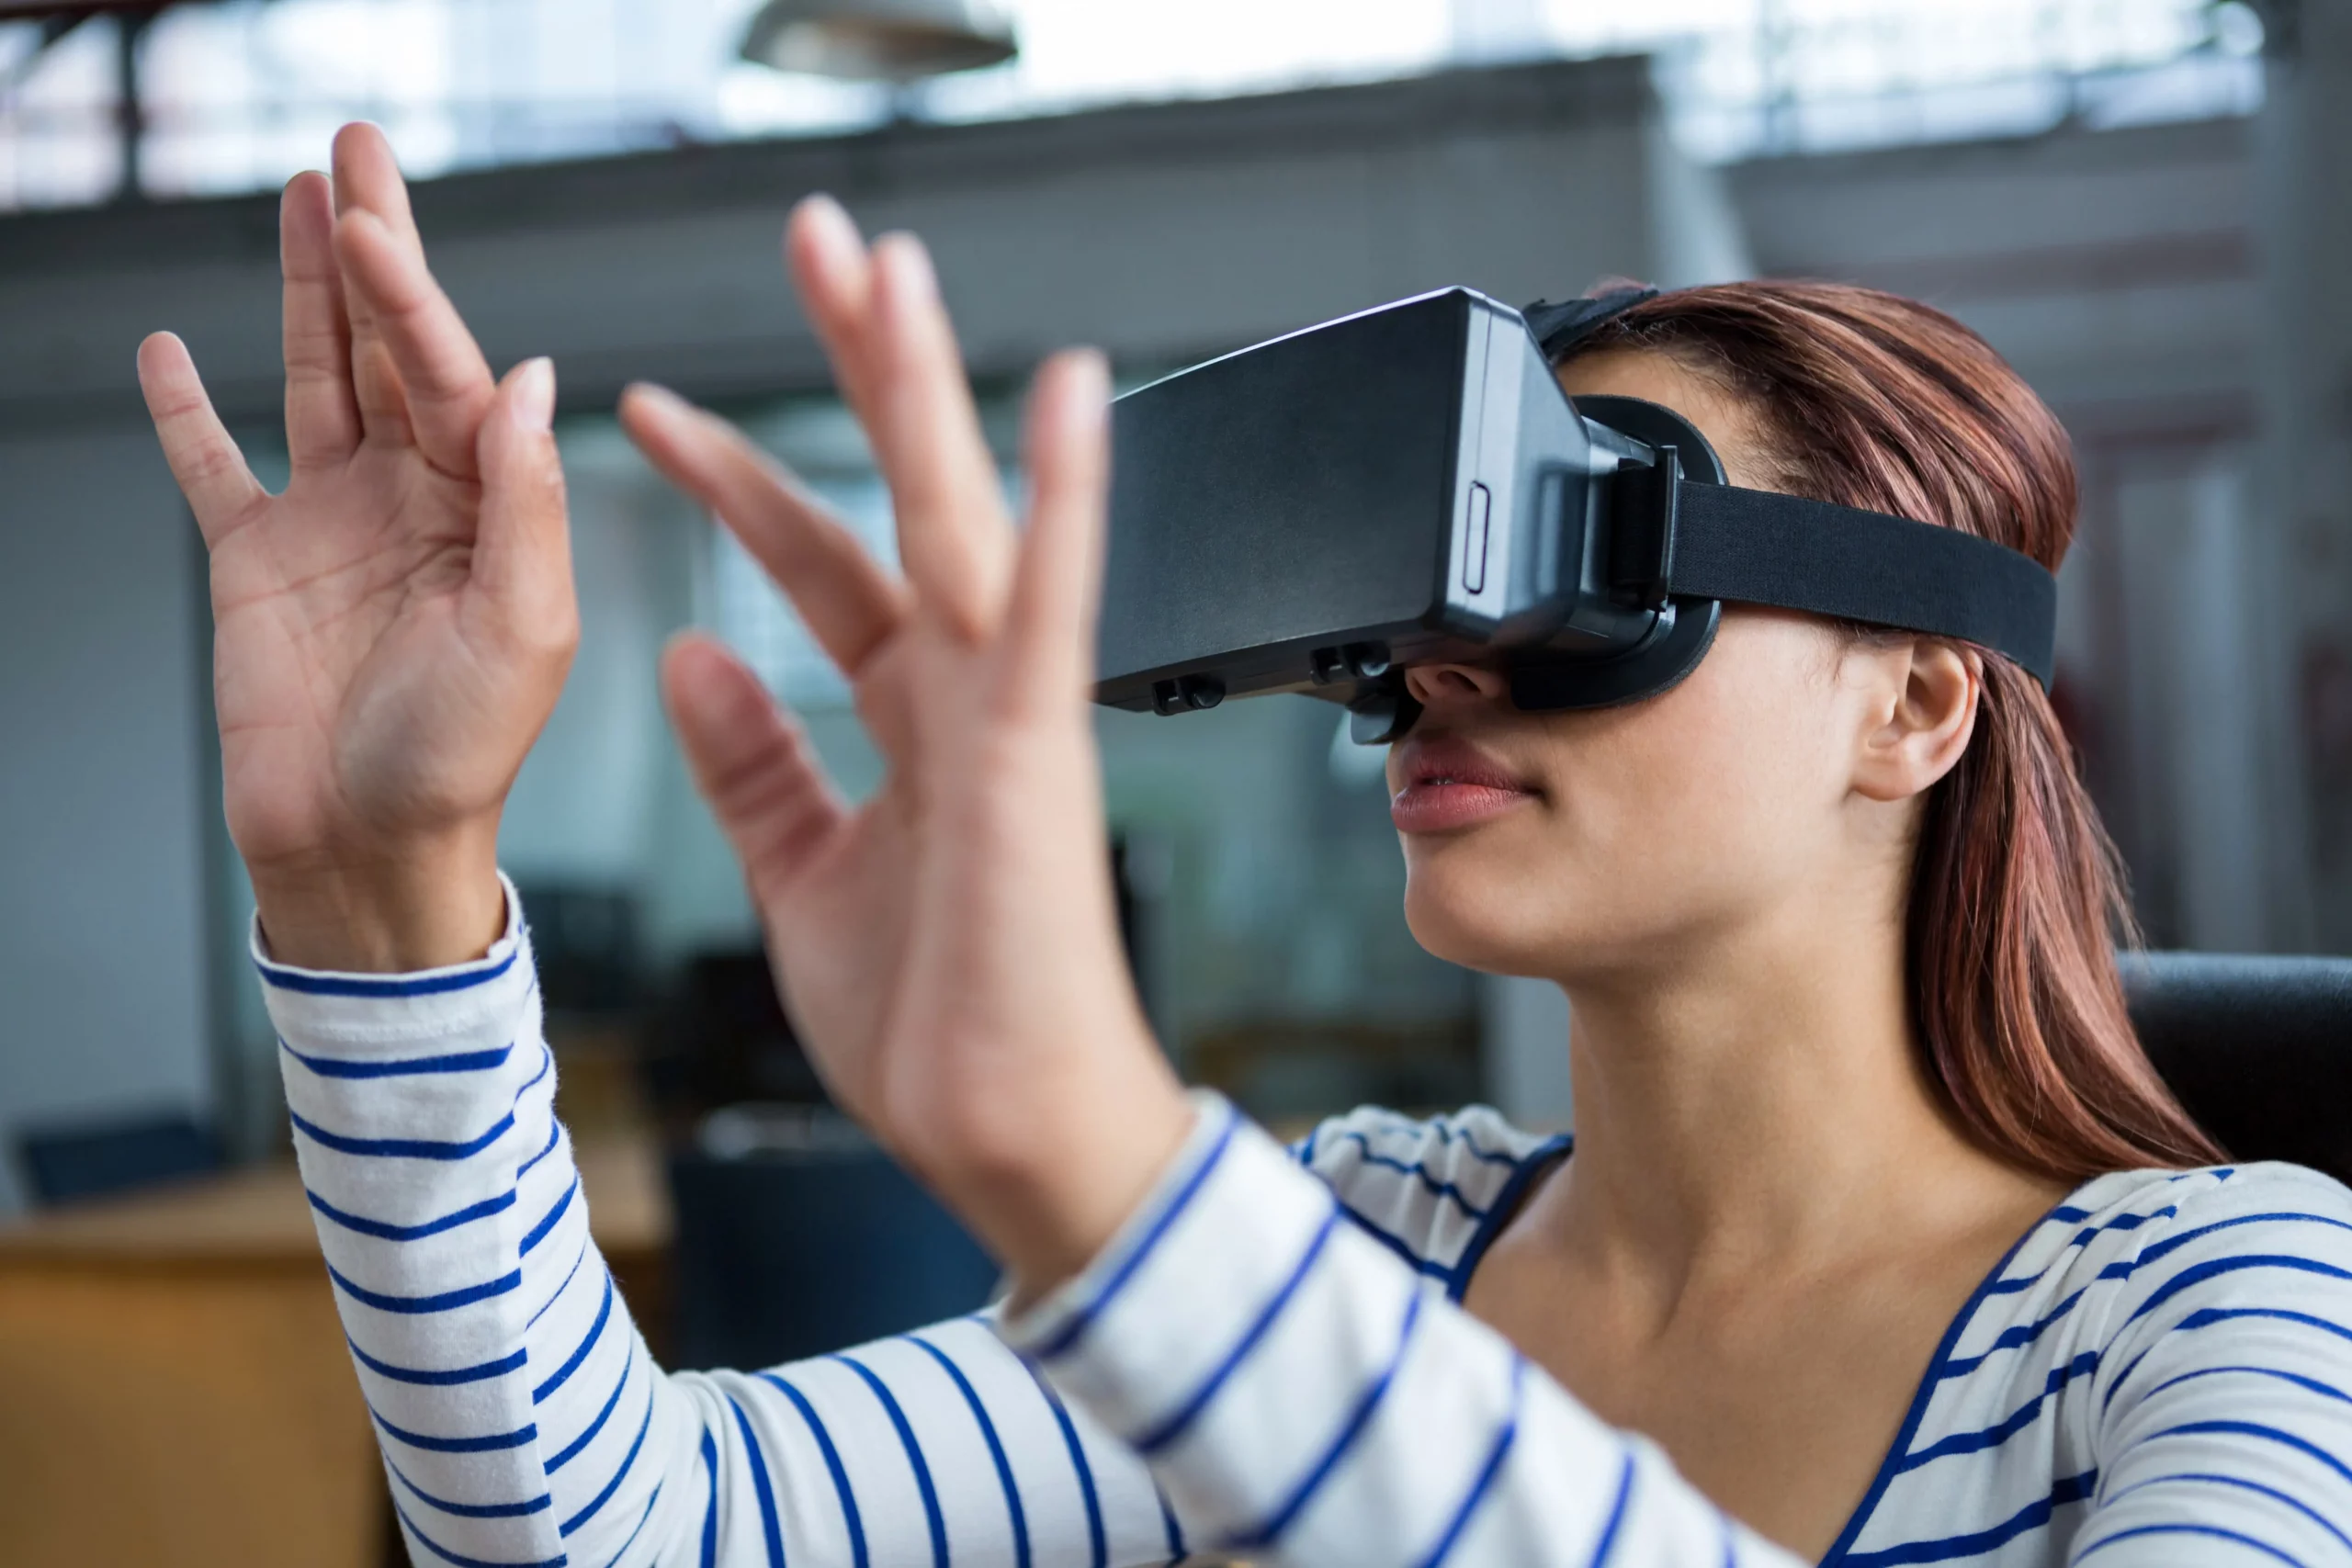 jesma agency - realtà aumentata e realtà virtuale